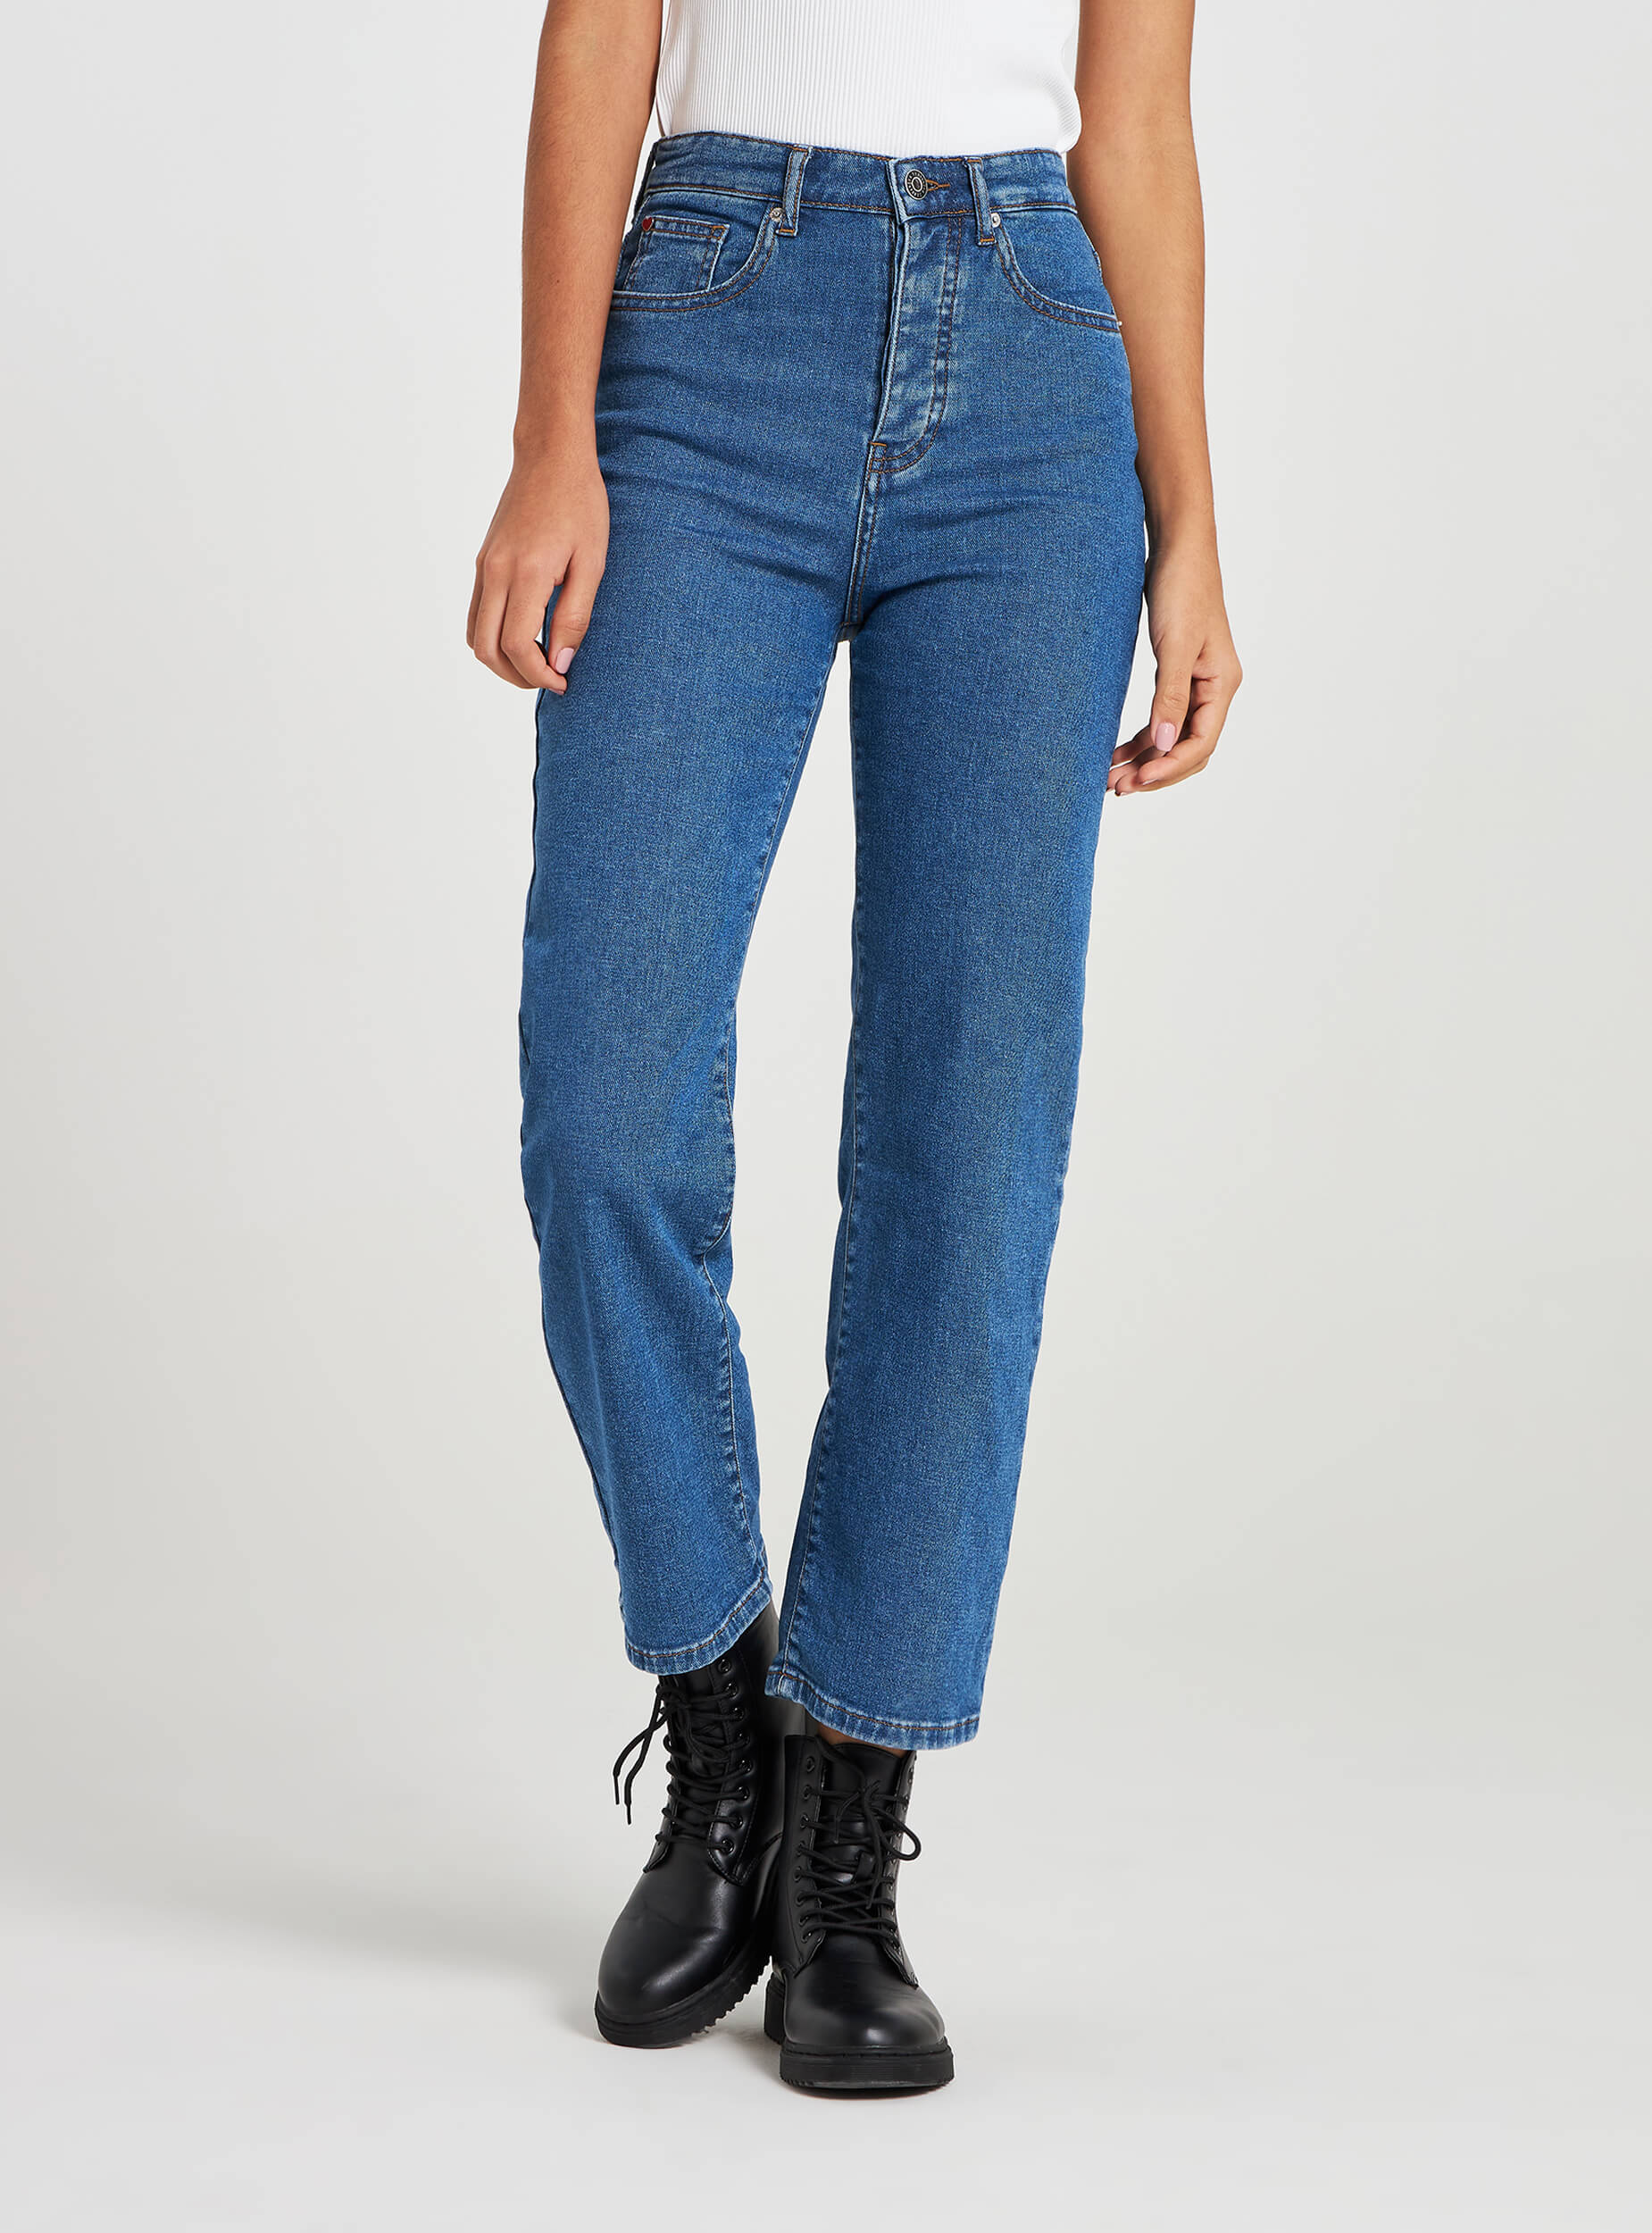 buy high waist jeans online